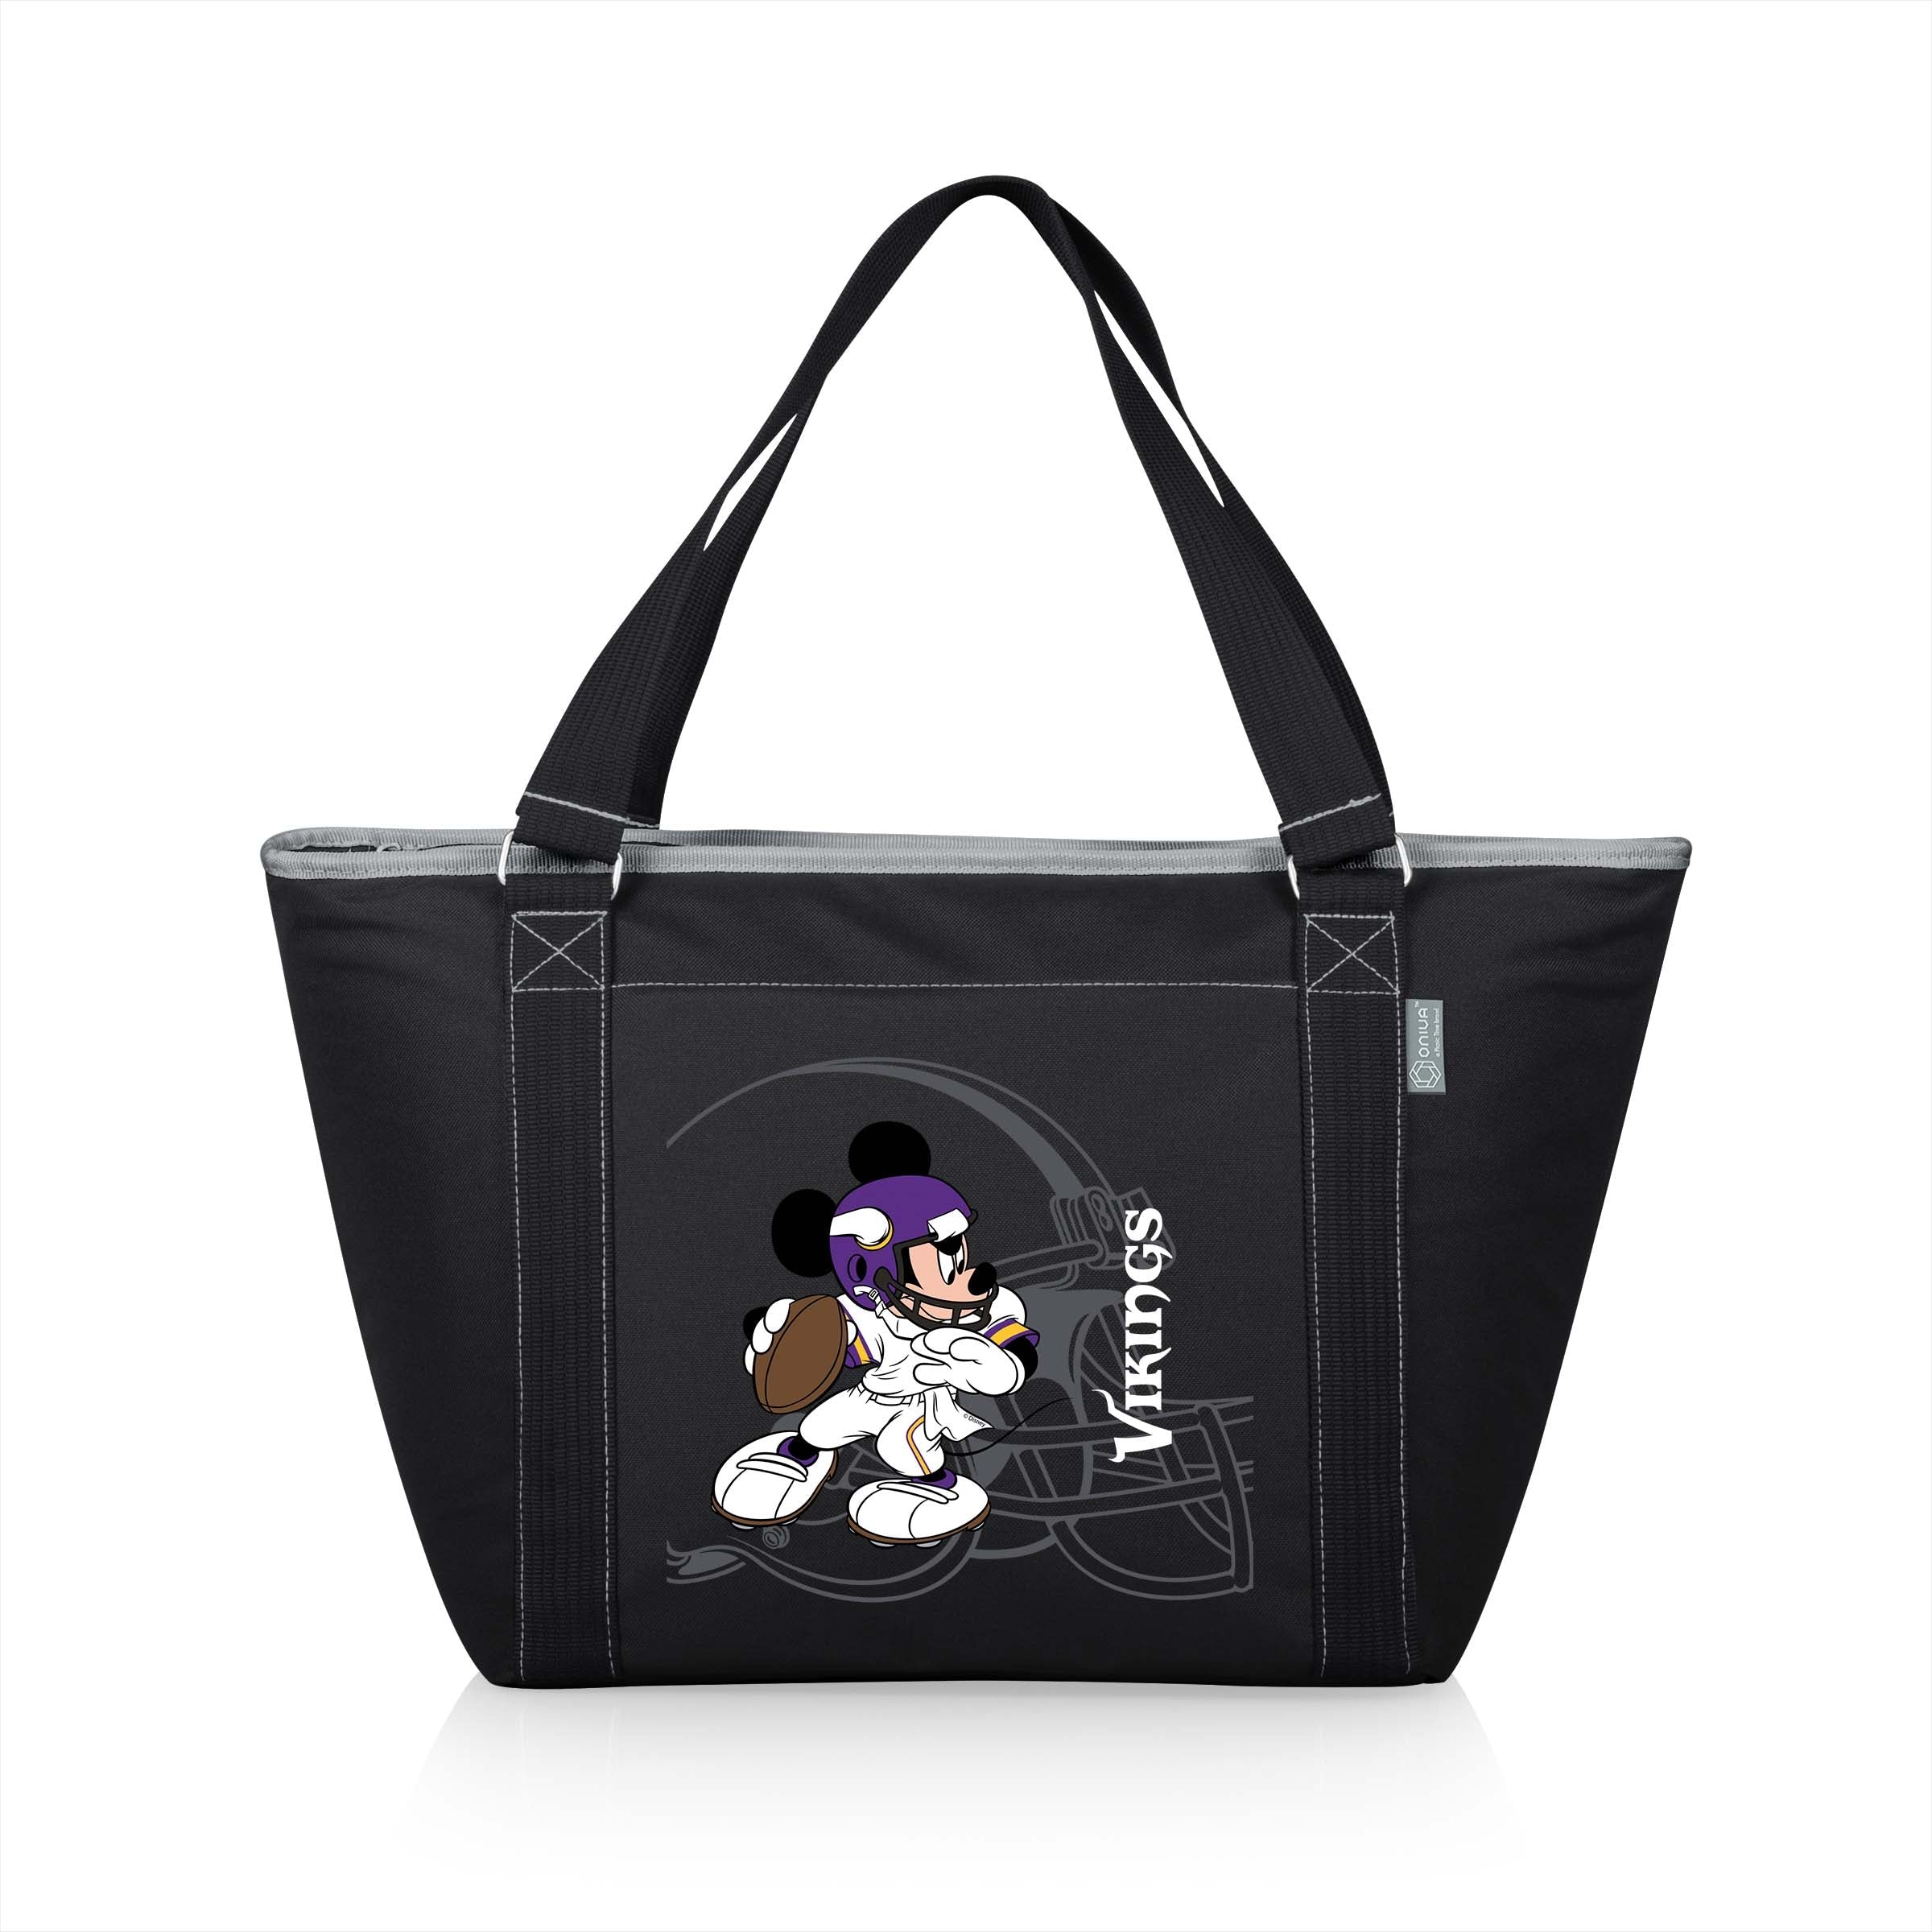 Minnesota Vikings Mickey Mouse - Topanga Cooler Tote Bag